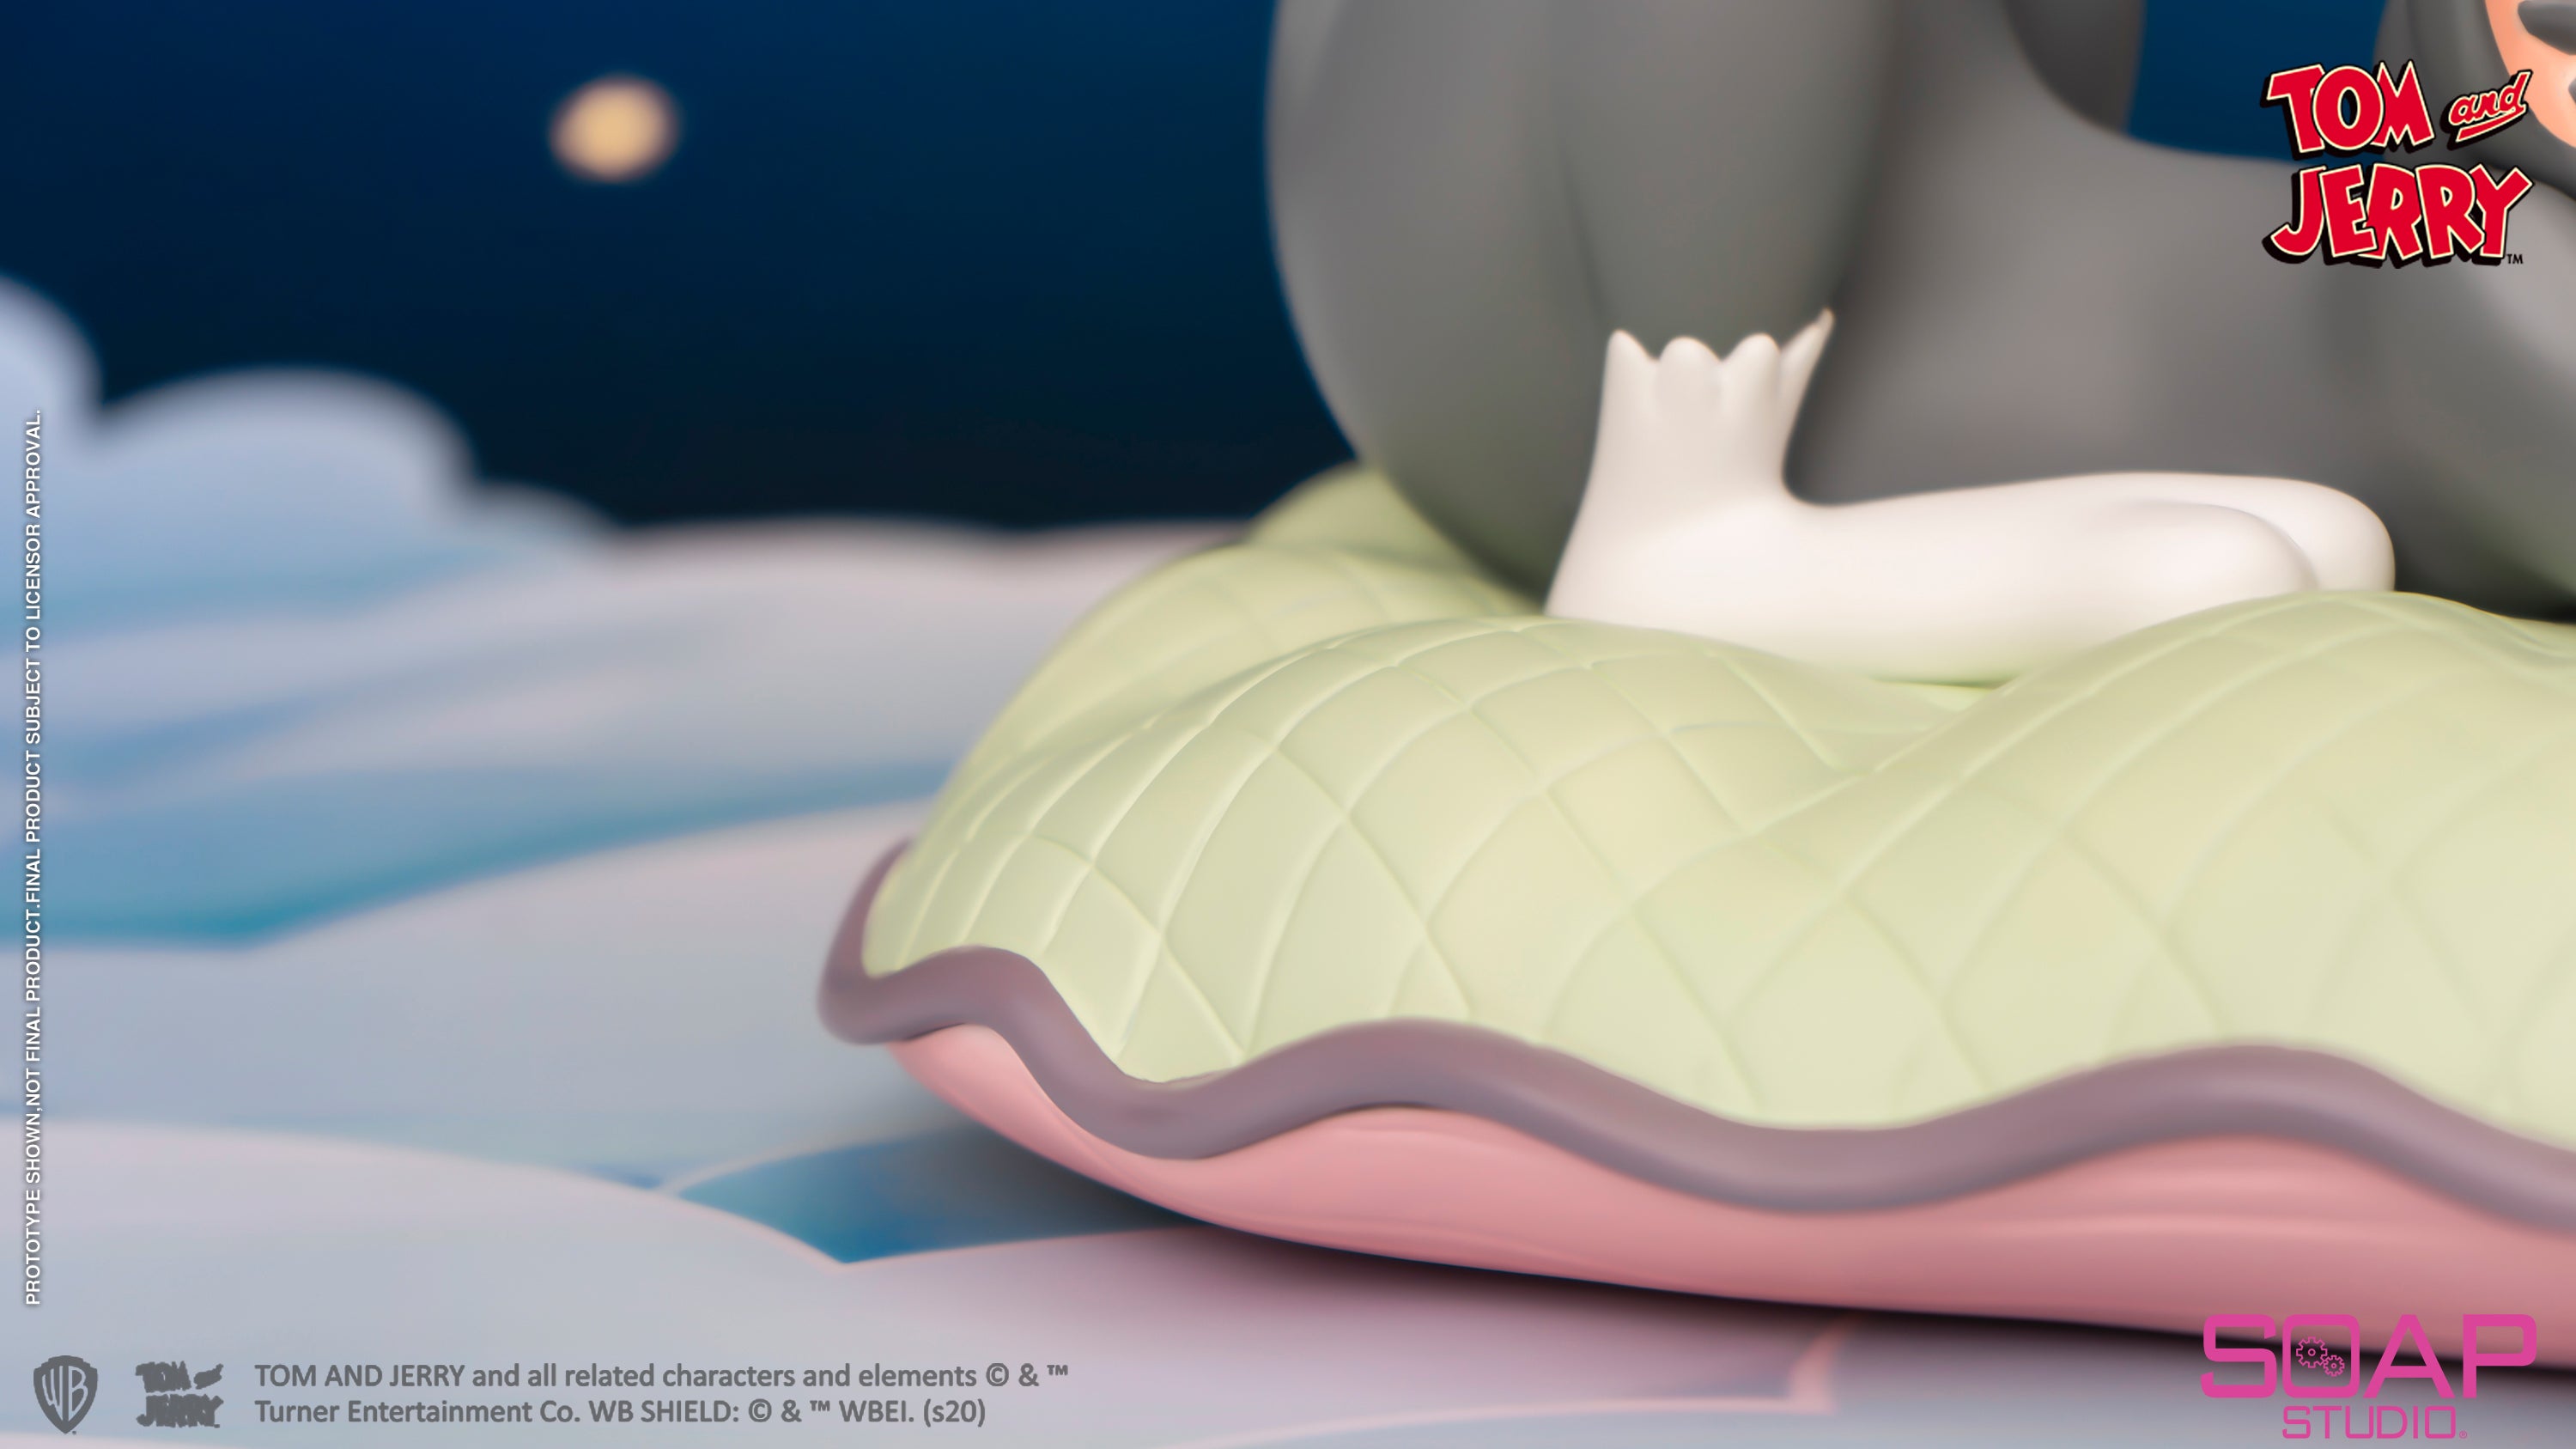 Soap Studio CA107 Tom and Jerry: Sweet Dreams Figure Statue